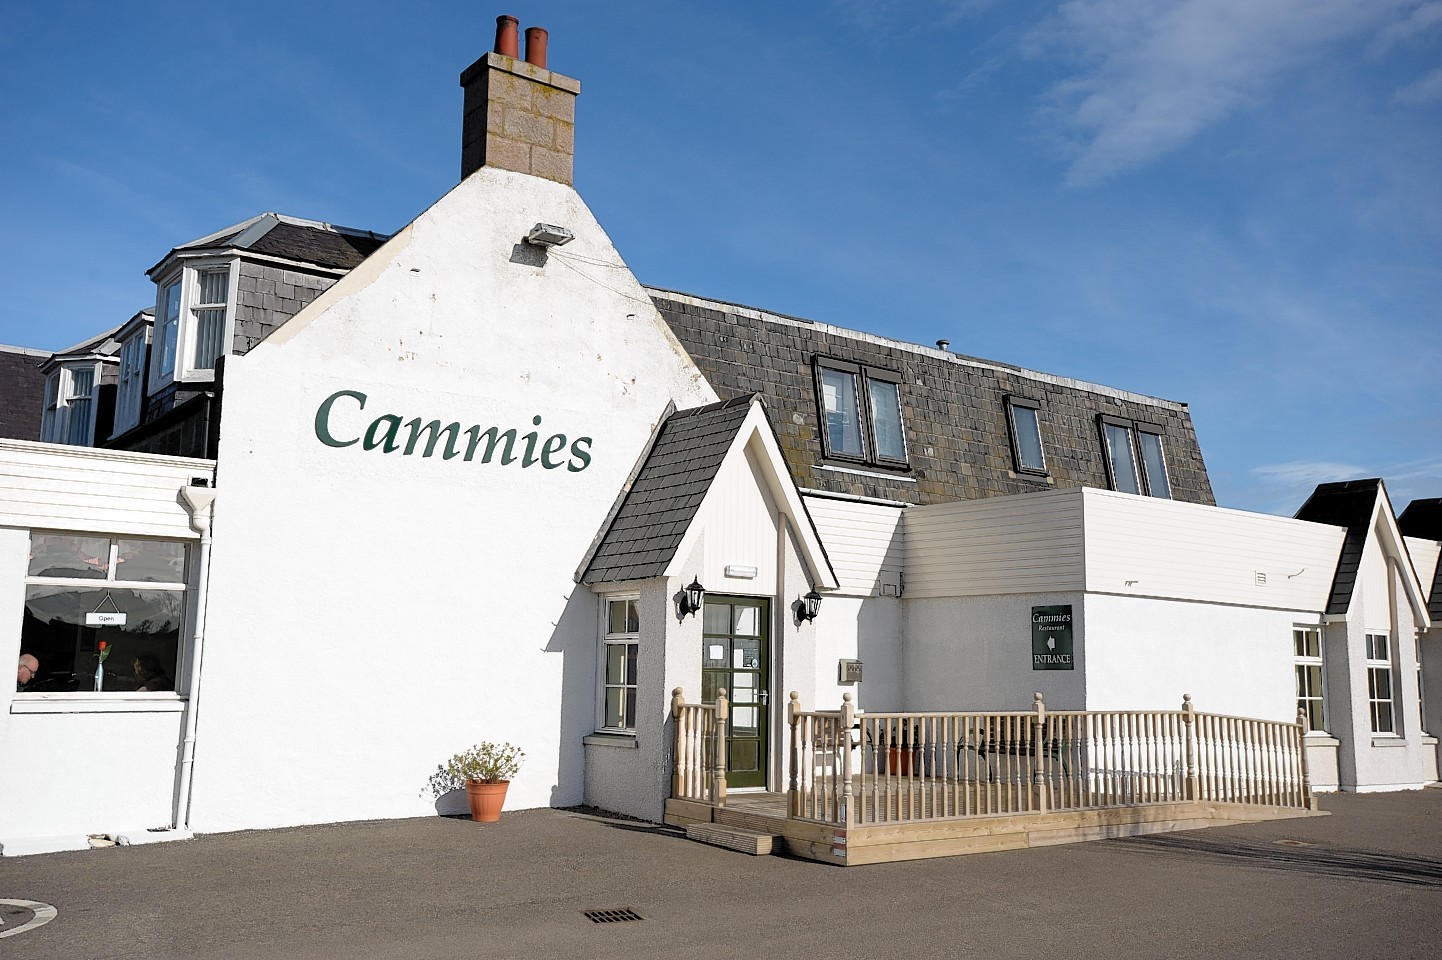 Cammies Restaurant, near Newtonhill